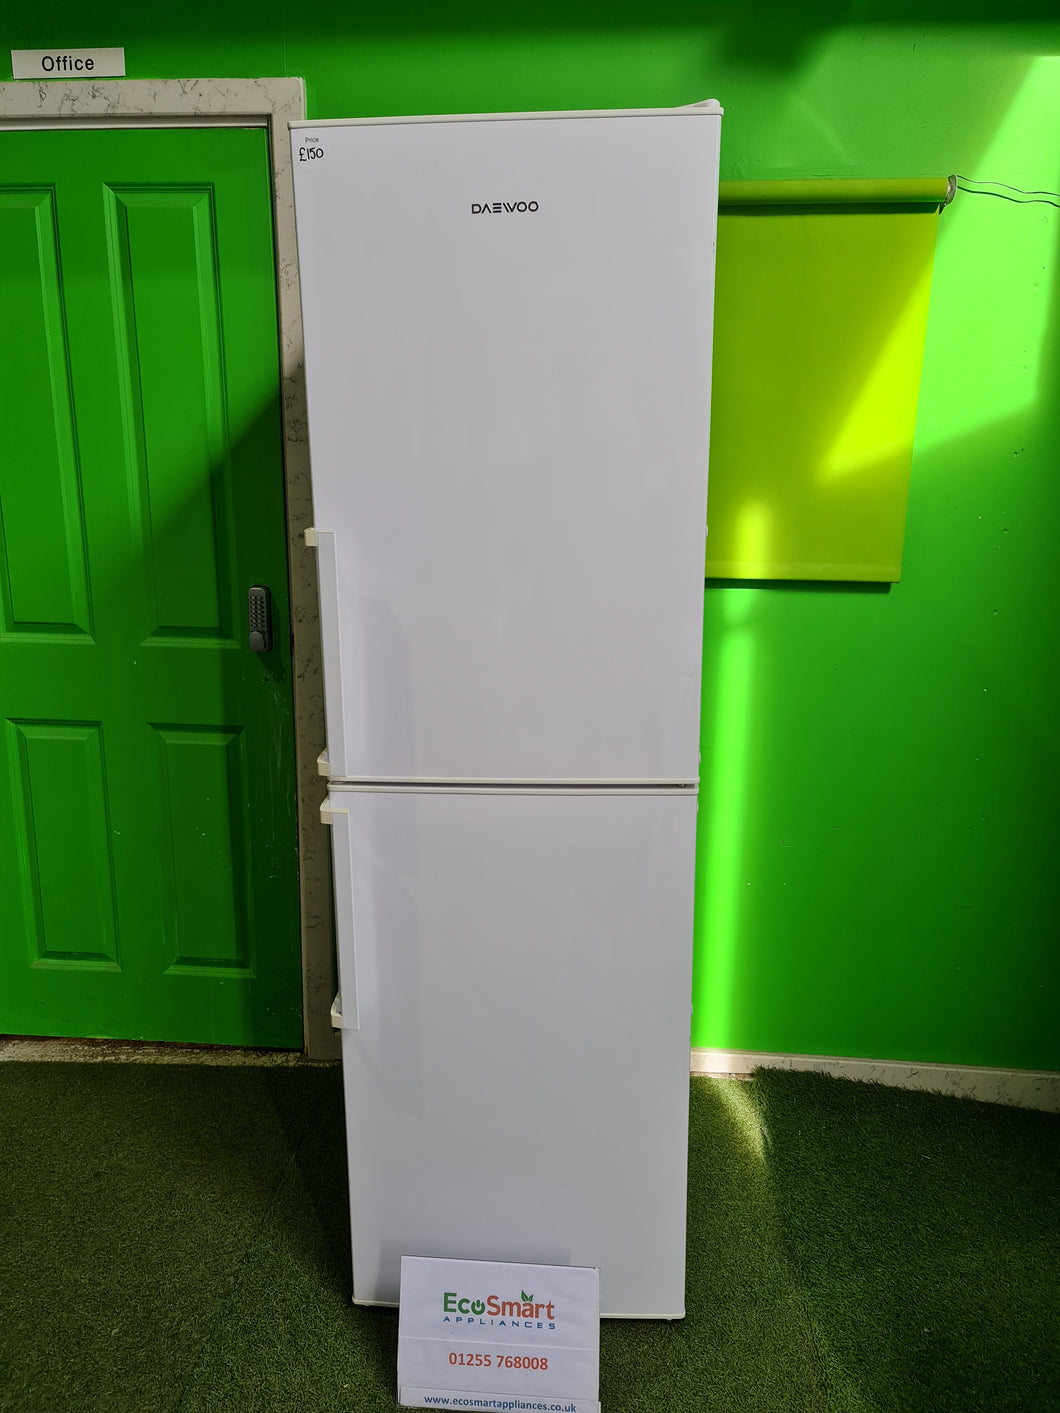 EcoSmart Appliances - Daewoo RN305NW 55cm Wide Freestanding Frost Free Fridge Freezer White (1422)